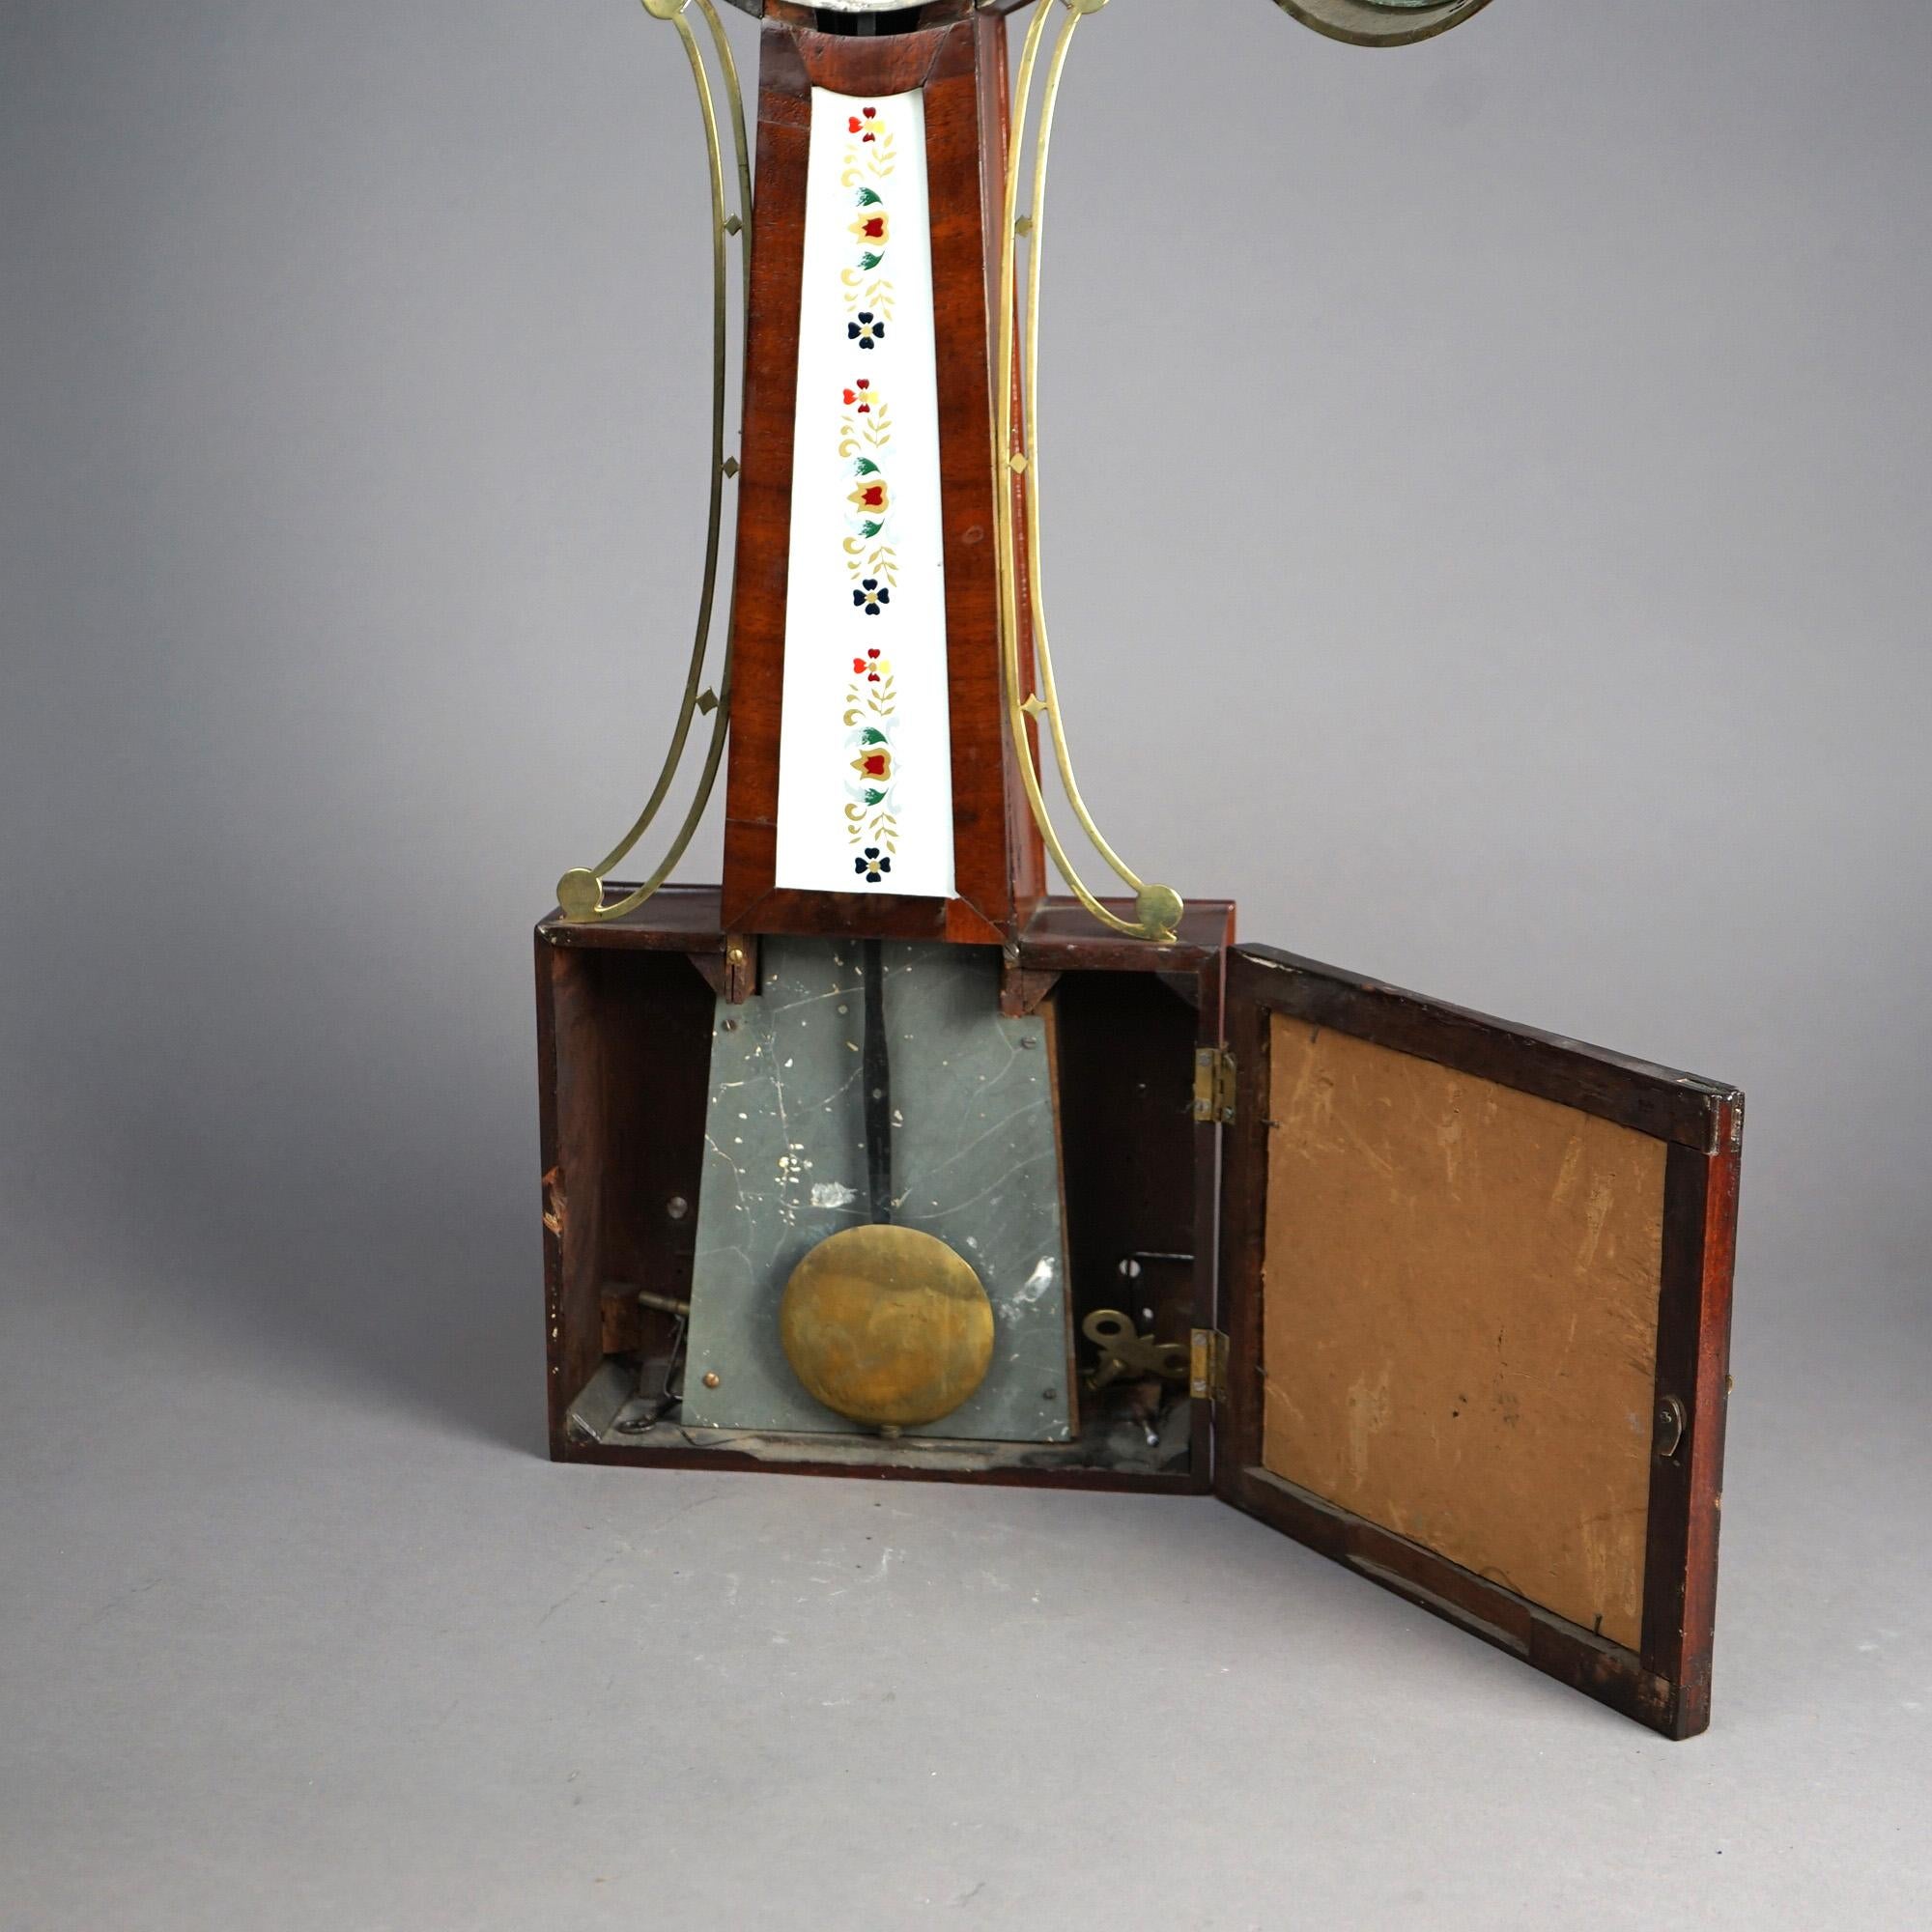 Antique Waterbury Mahogany Banjo Clock with Eglomise Panel Circa 1830 8